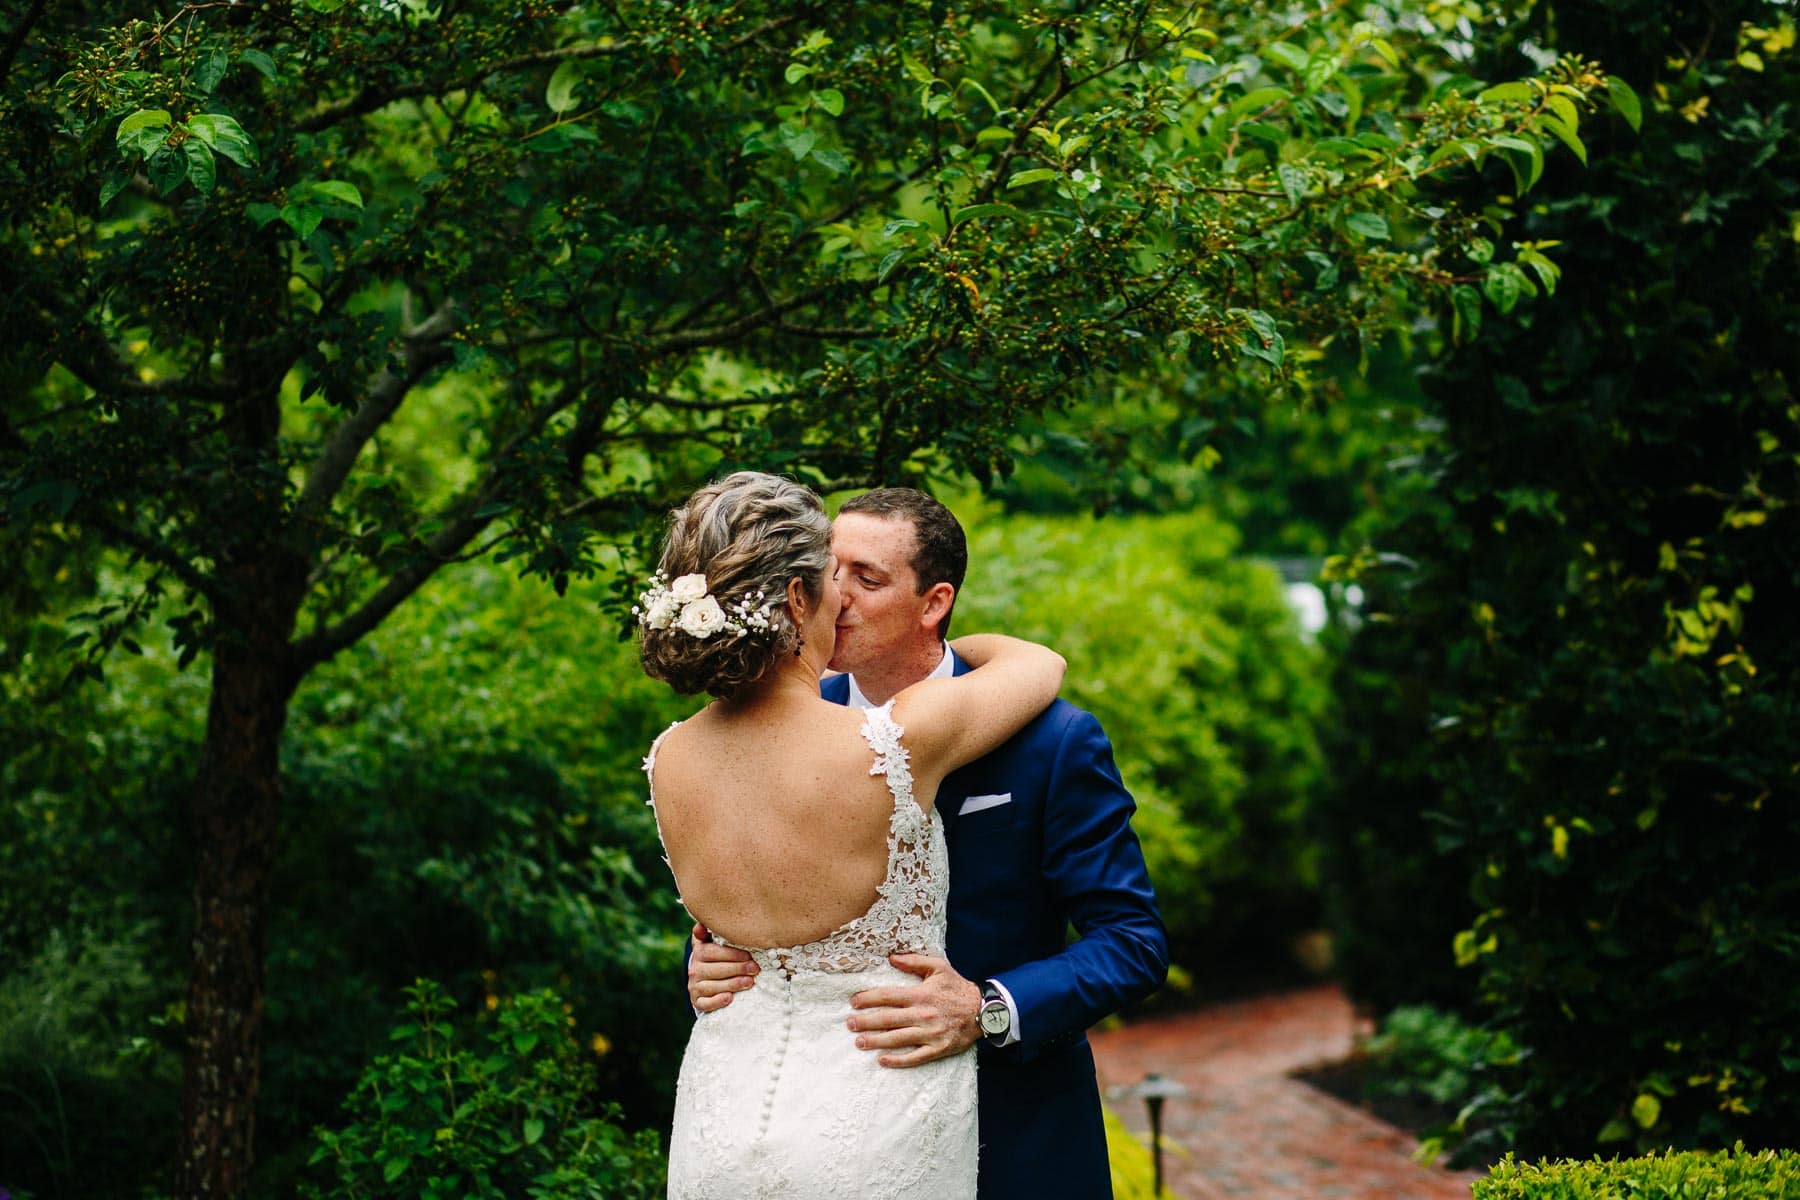 Tabor Academy wedding of Emily and Alex in Marion, MA | Kelly Benvenuto Photography | Boston Wedding Photographer